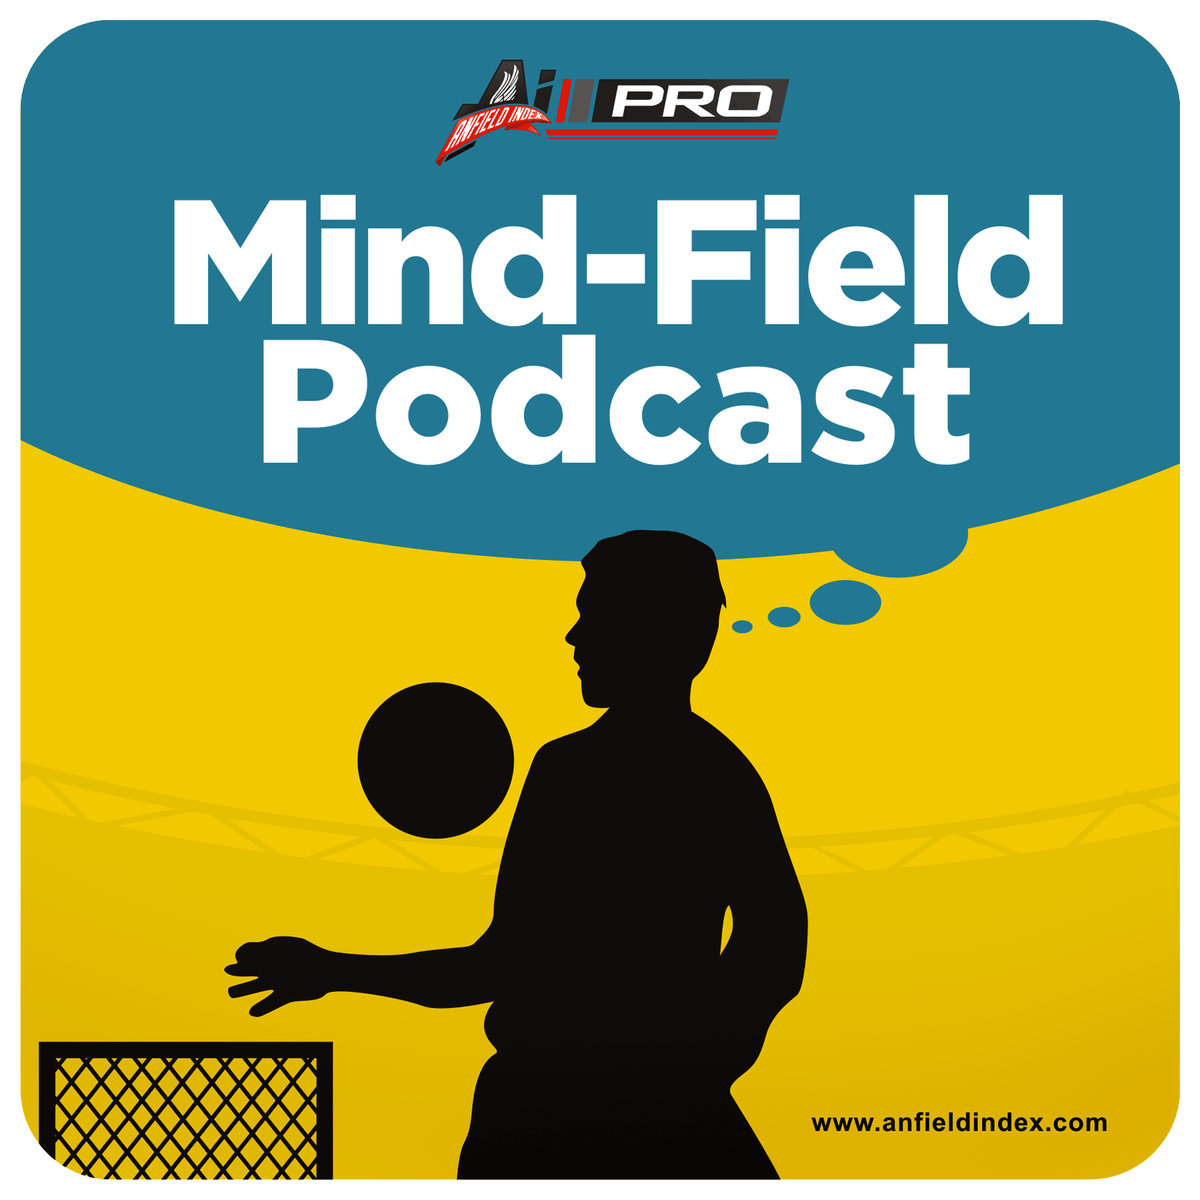 MindField Podcast: Process vs Outcome - The Klopp Conundrum